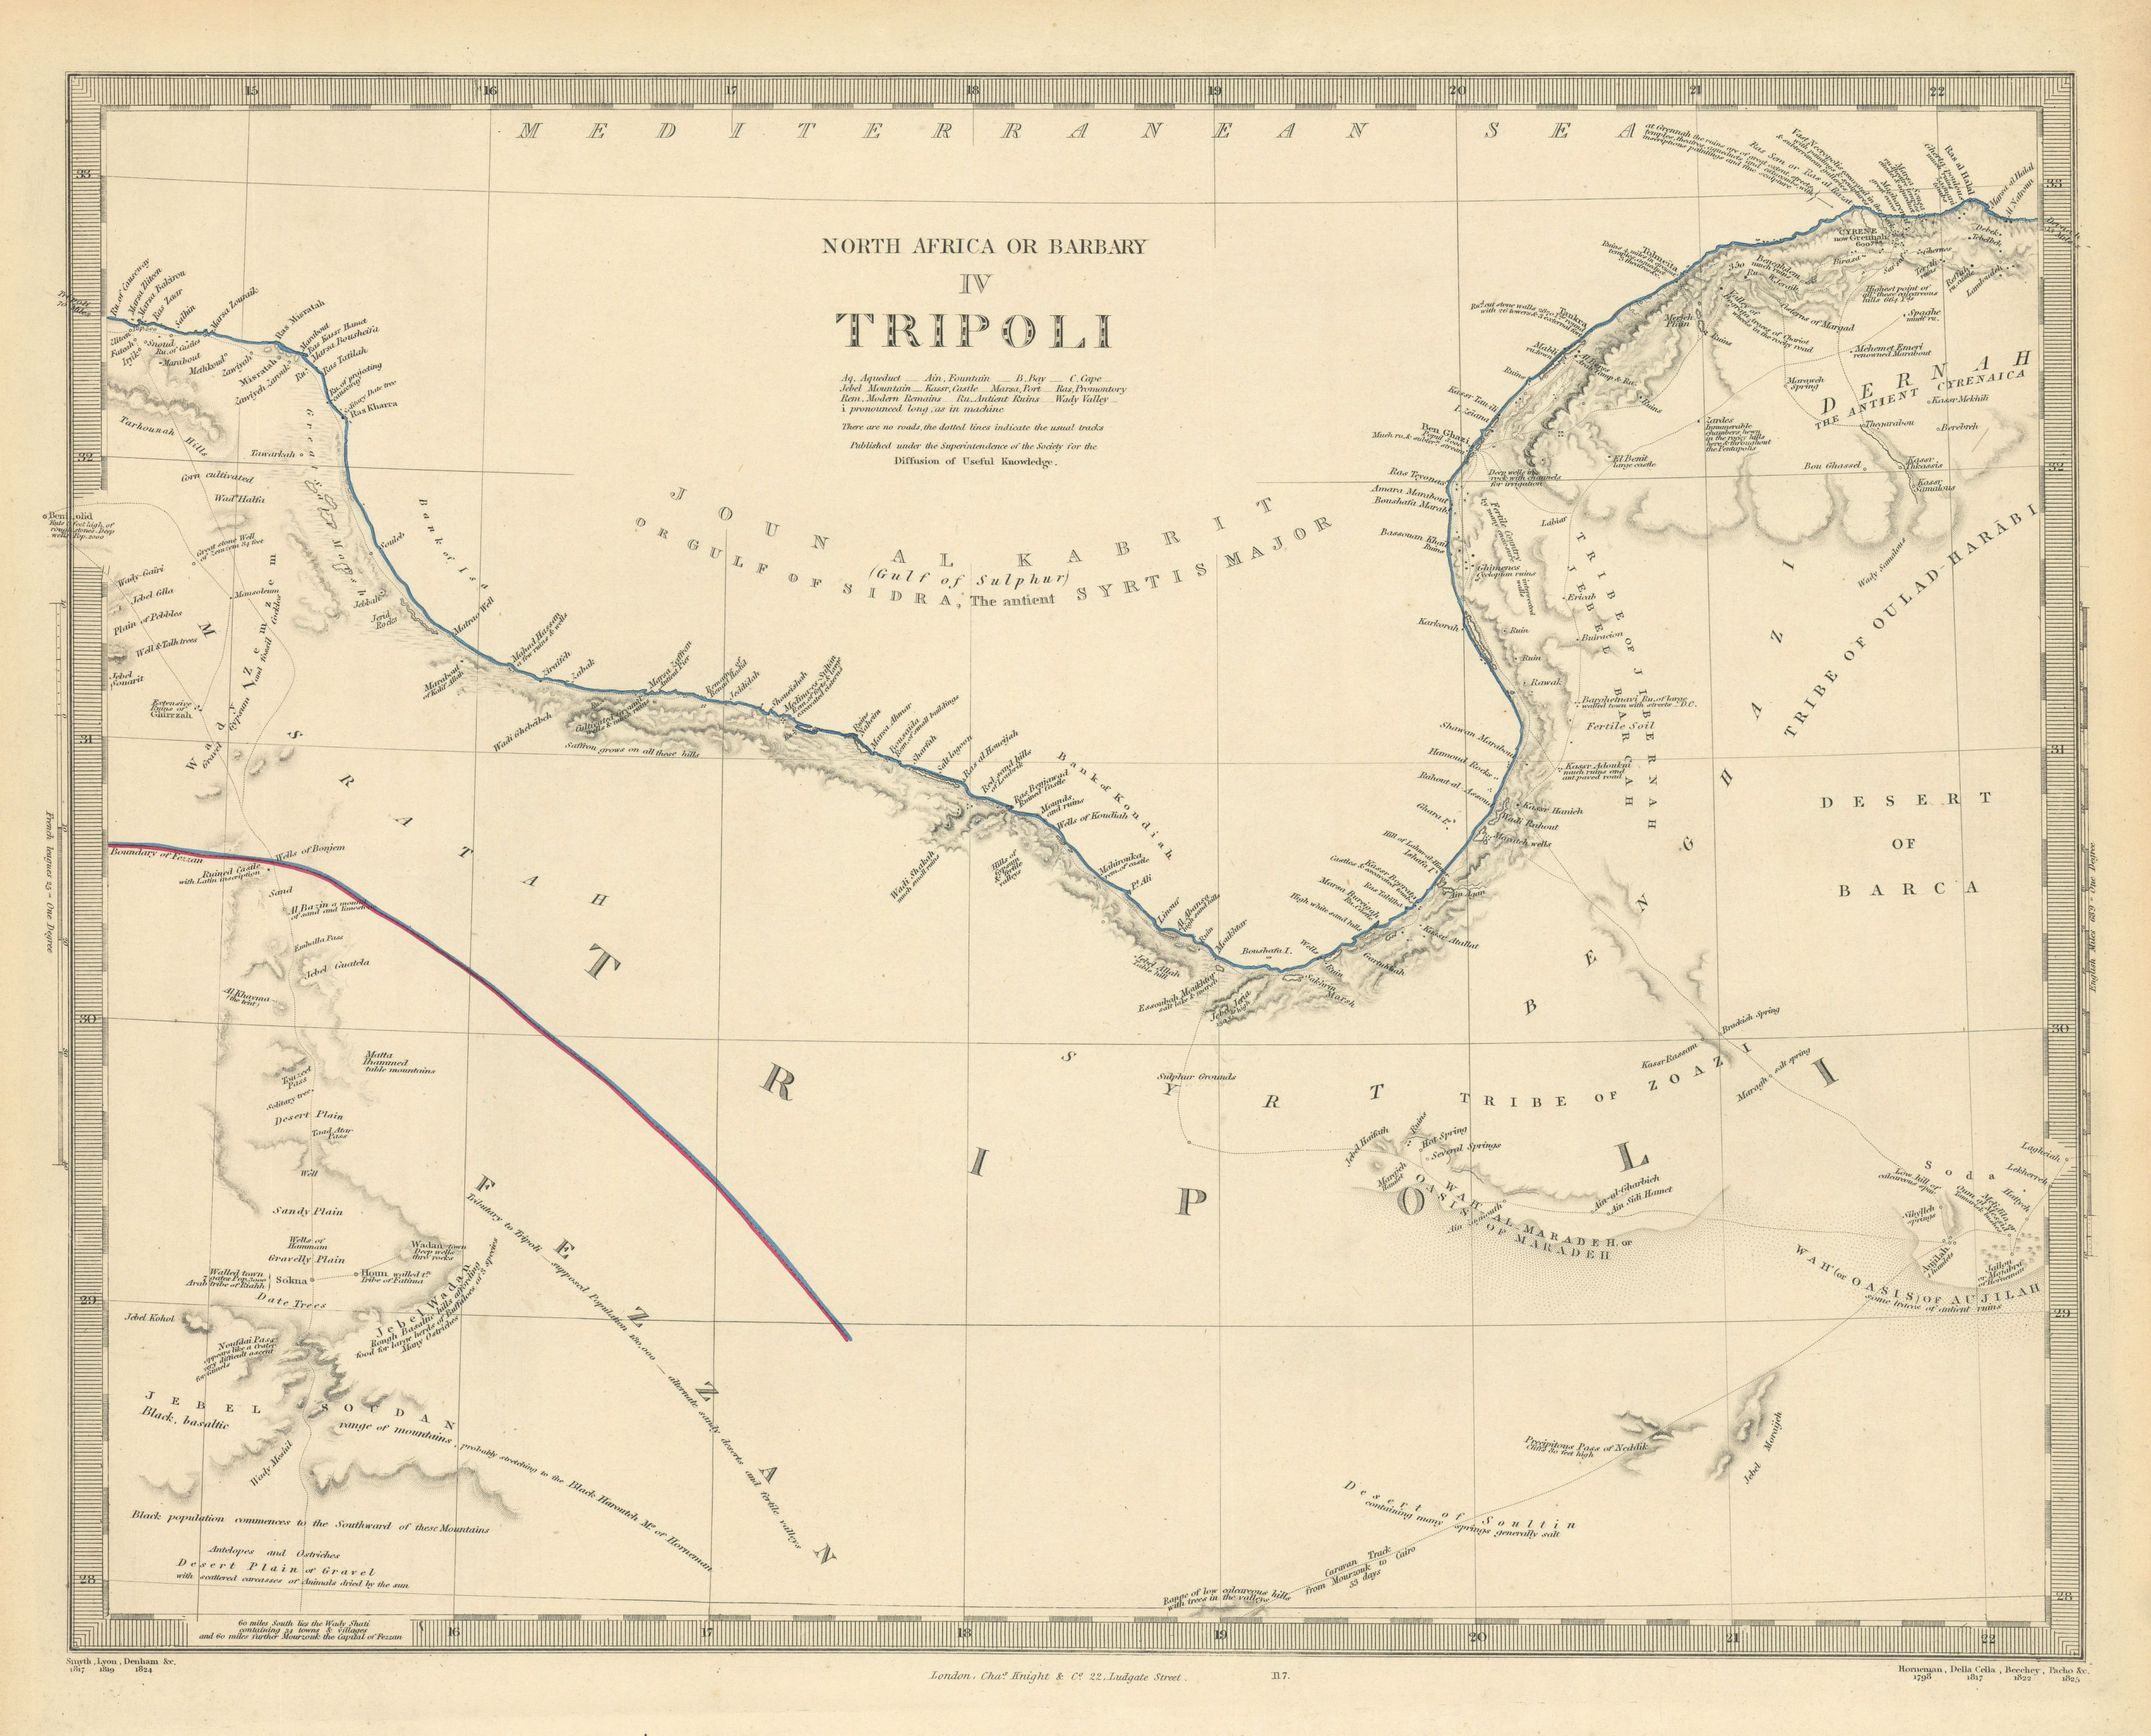 Associate Product NORTH AFRICA OF BABRBARY IV. TRIPOLI. Libya. Gulf of Sidra Sirte. SDUK 1851 map